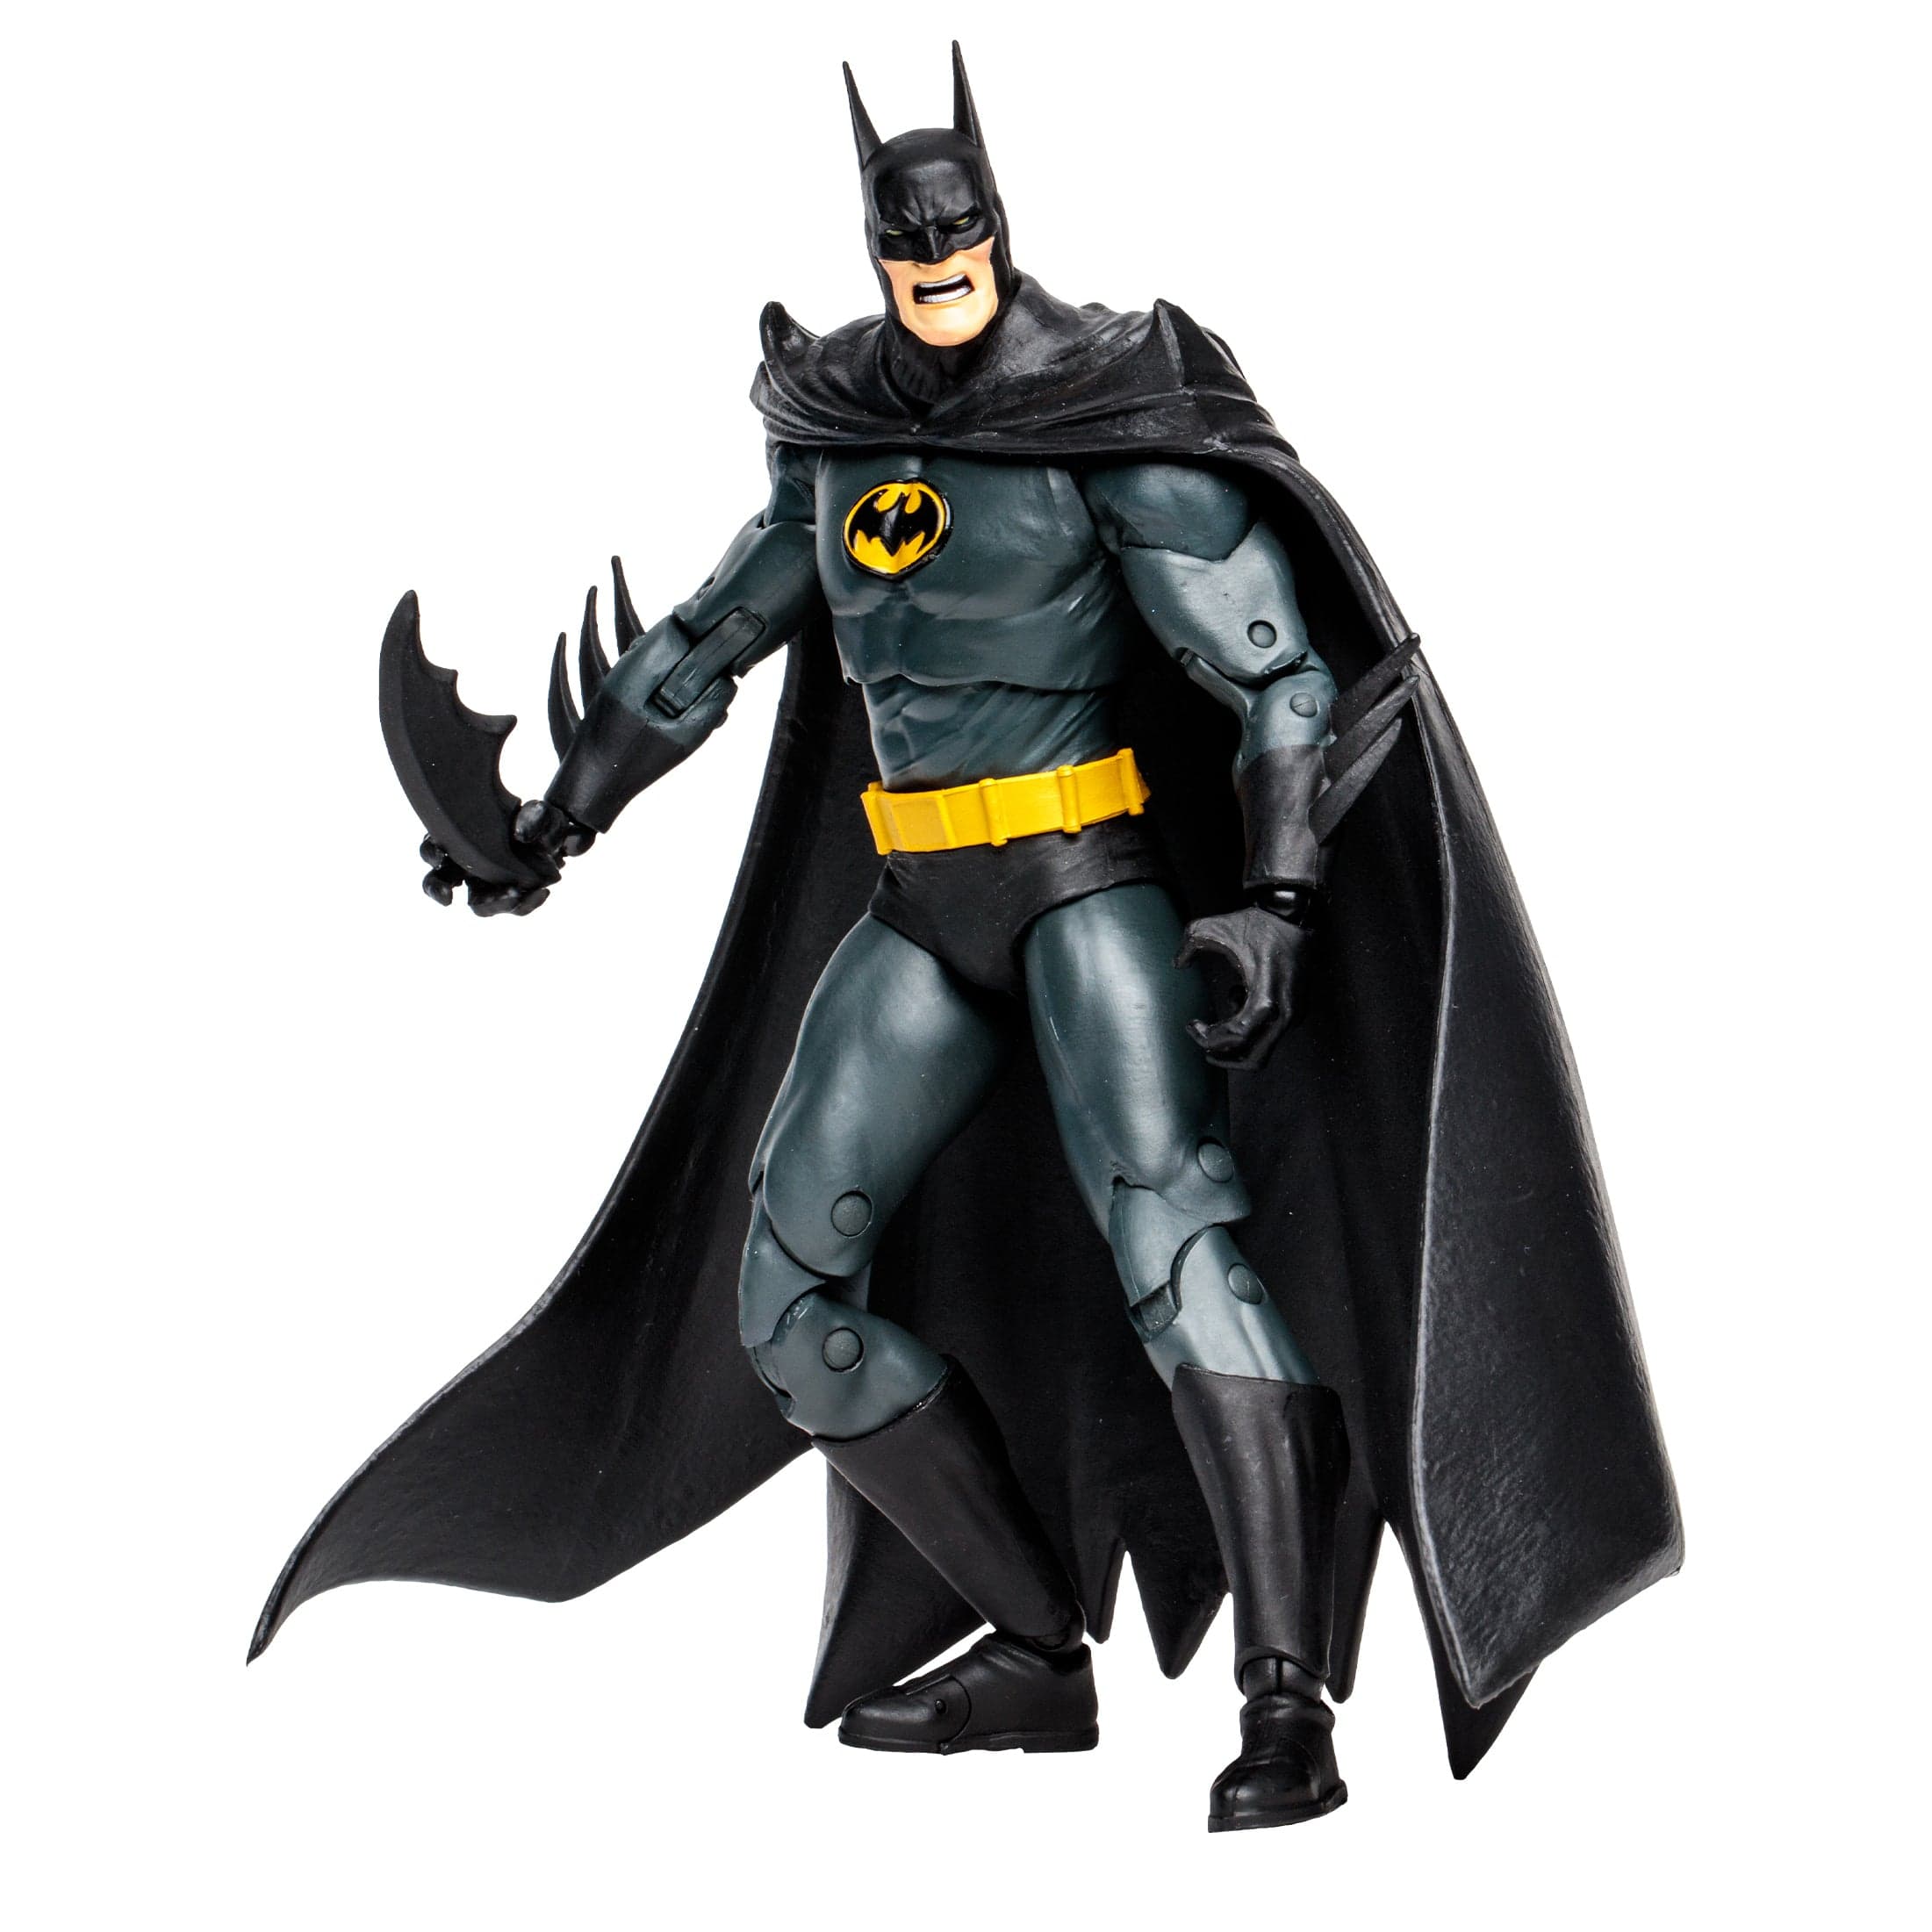 McFarlane Toys DC Multiverse Batman & Spawn Action Figure Two-Pack